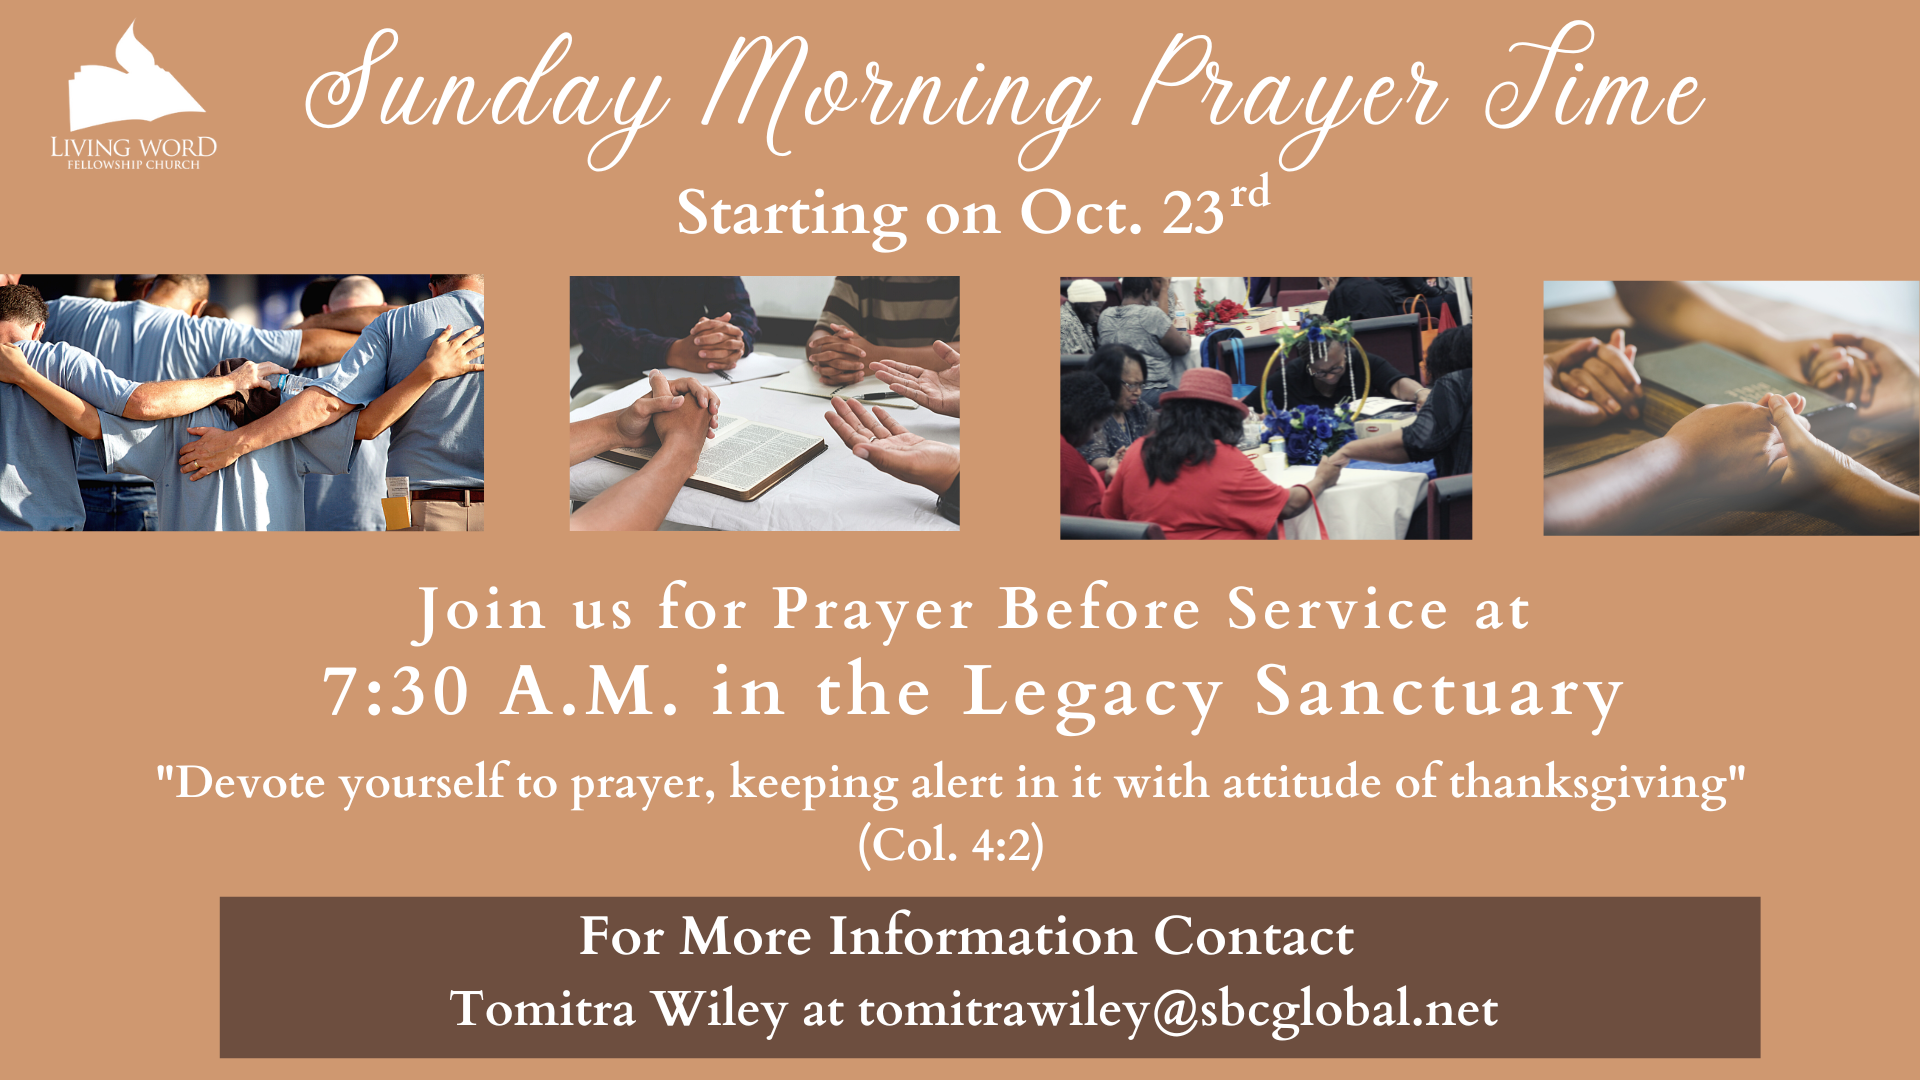 Sunday Morning Prayer Time head image